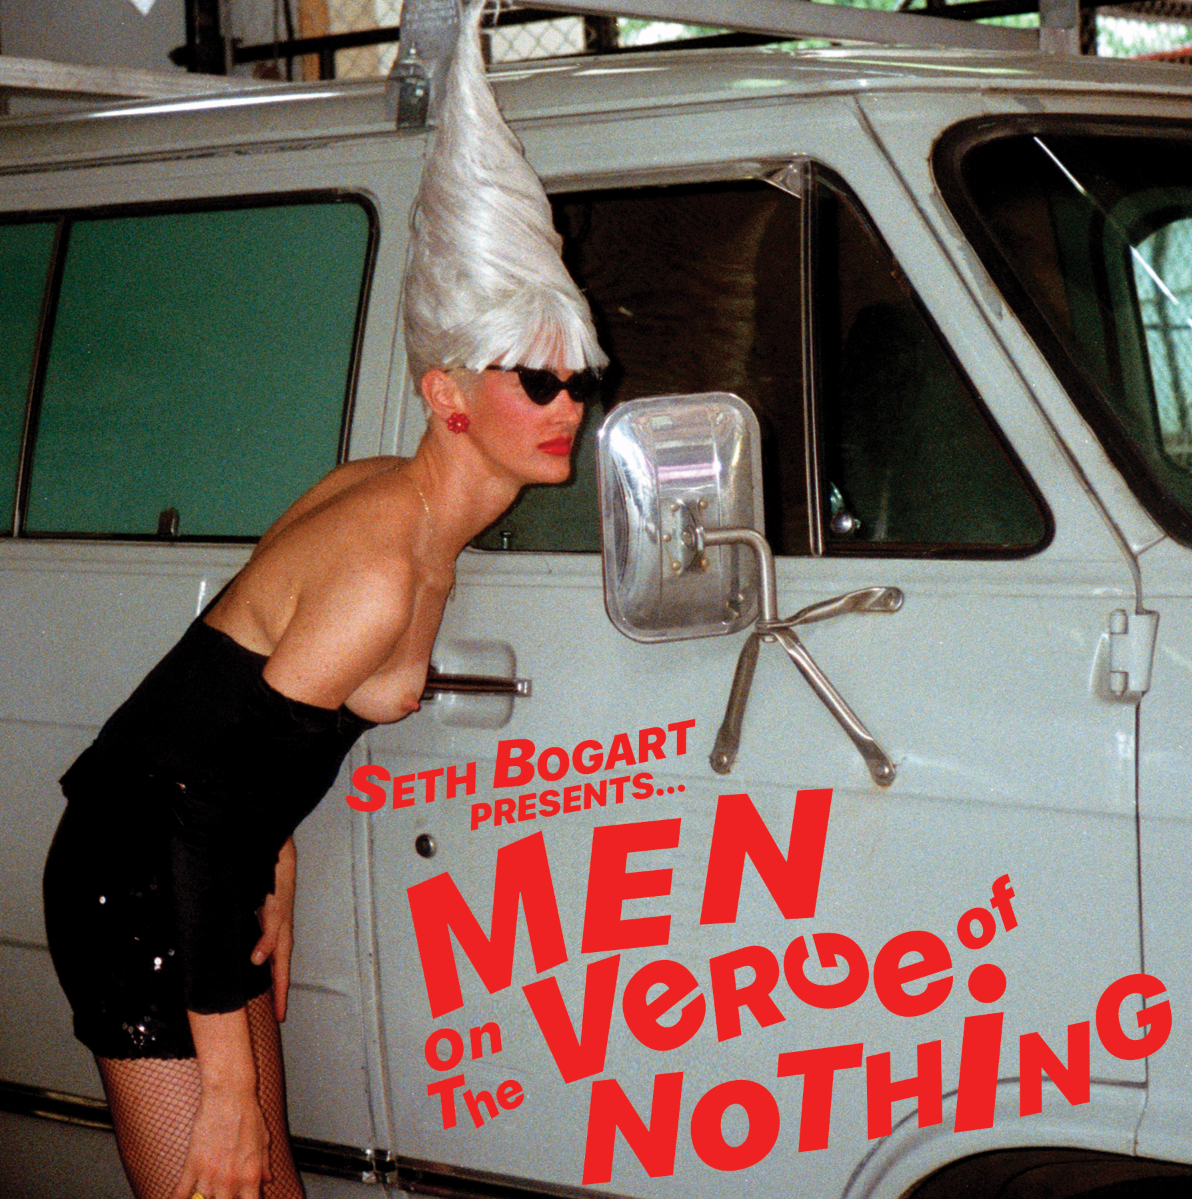 Seth Bogart Presents... Men on the Verge of Nothing LP